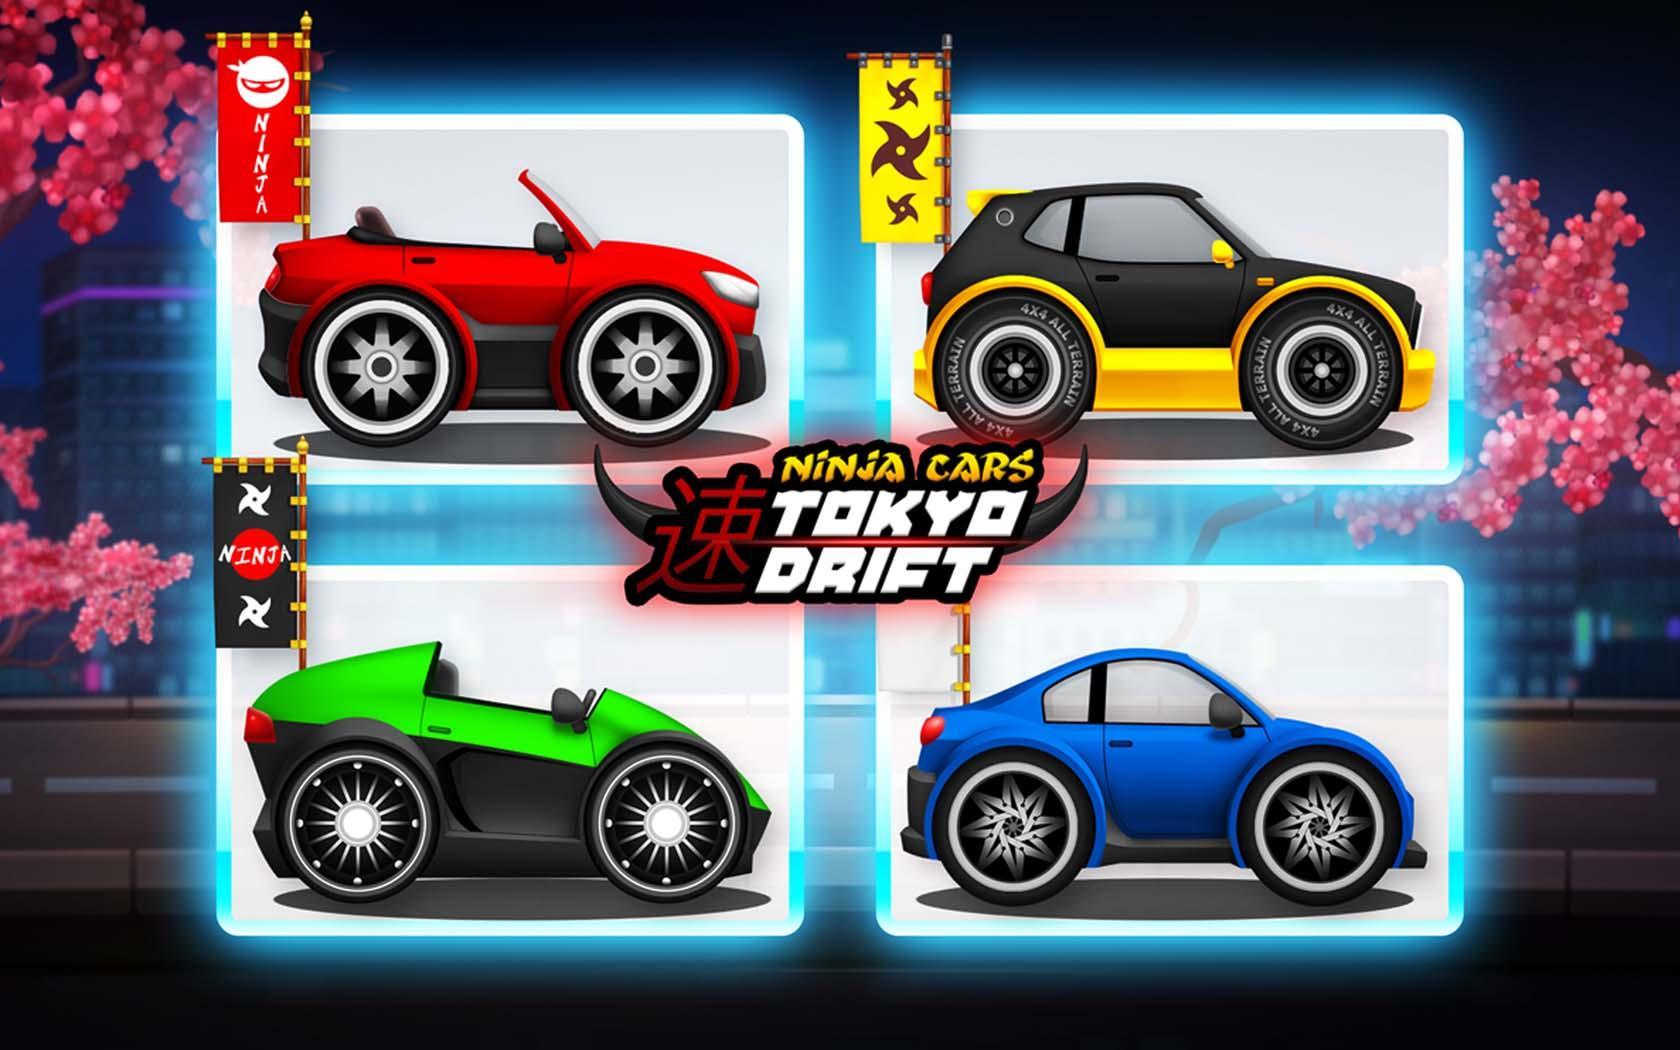 Screenshot 1 of Night City Tokyo Drift- Clumsy Ninja Chasing Cars 3.62